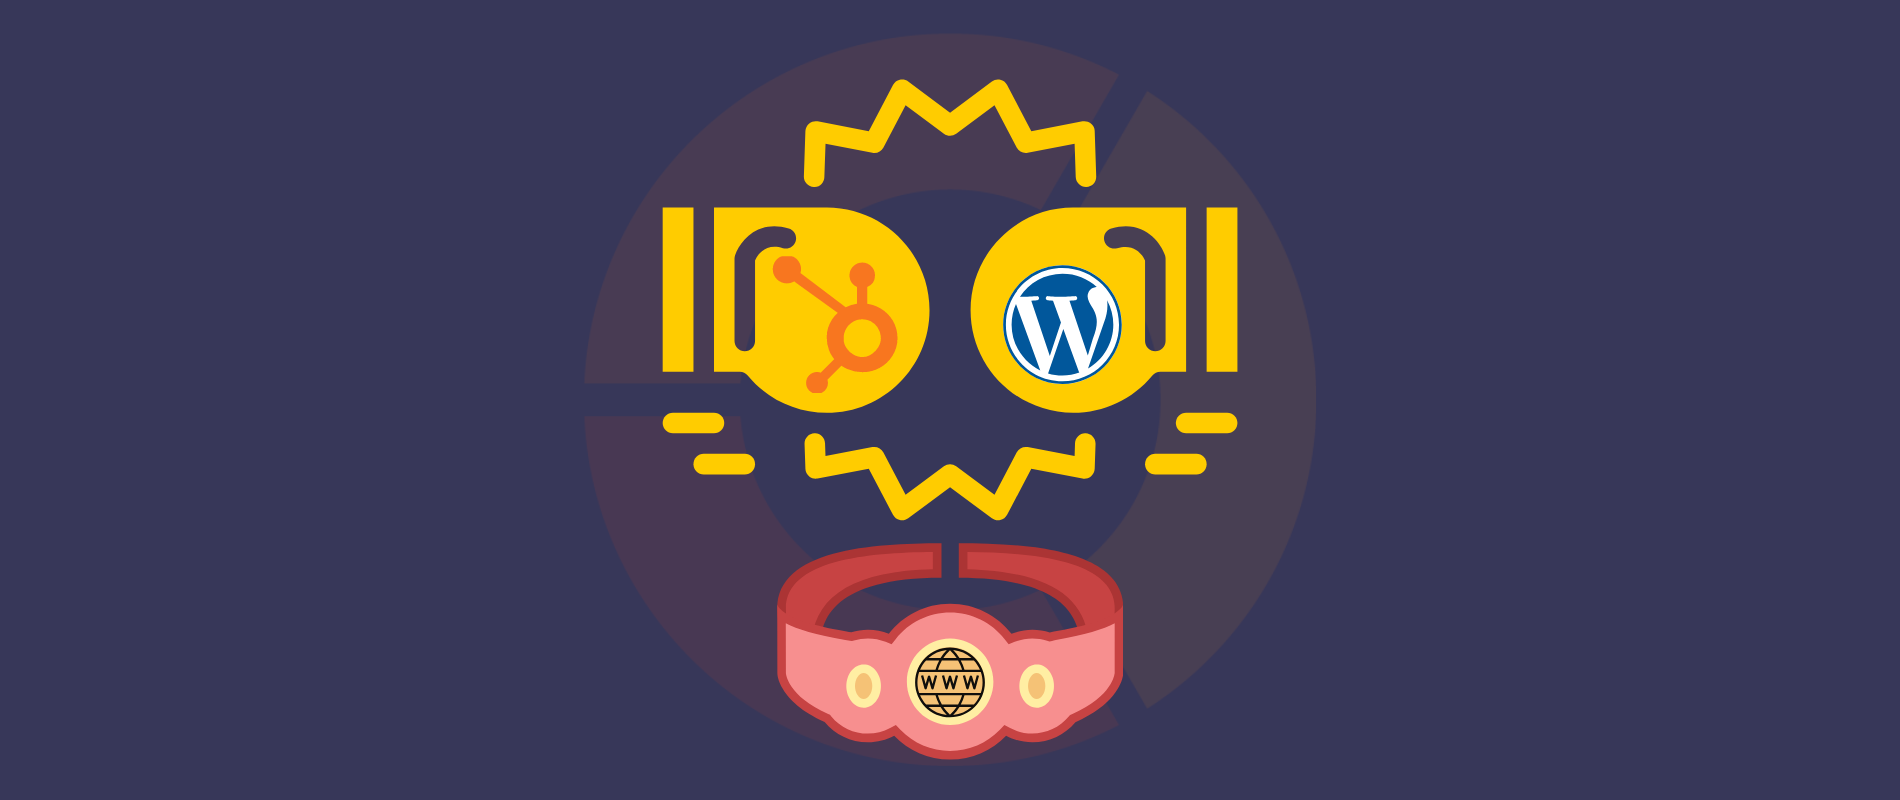 Let's consider HubSpot or Wordpress as your website platform? 